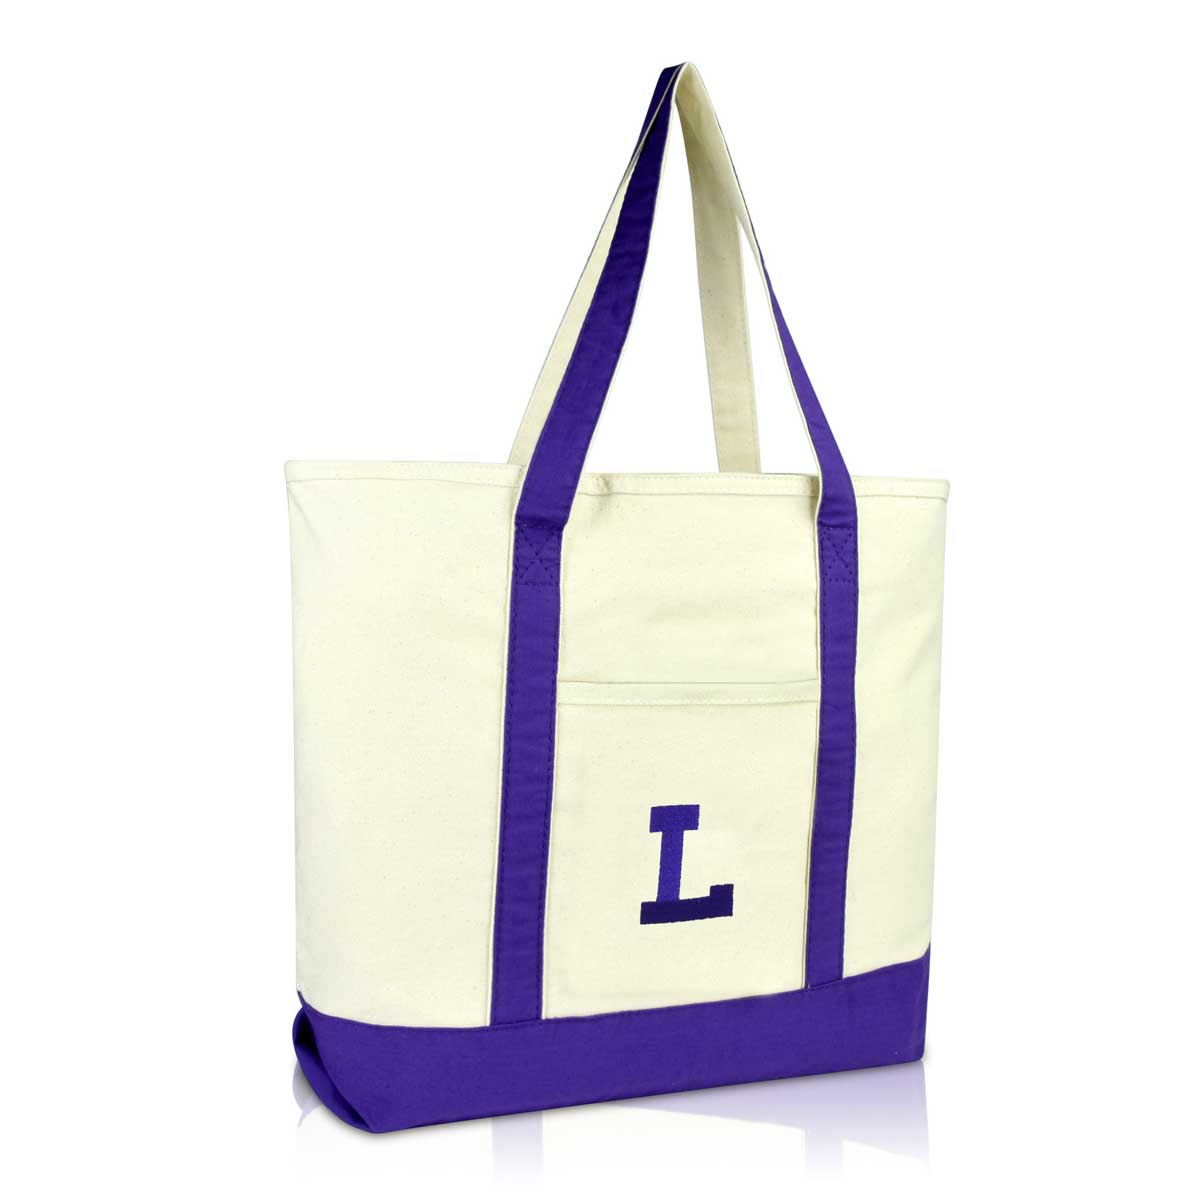 L'' Letter Initial Canvas Tote Bag - Initials Bags